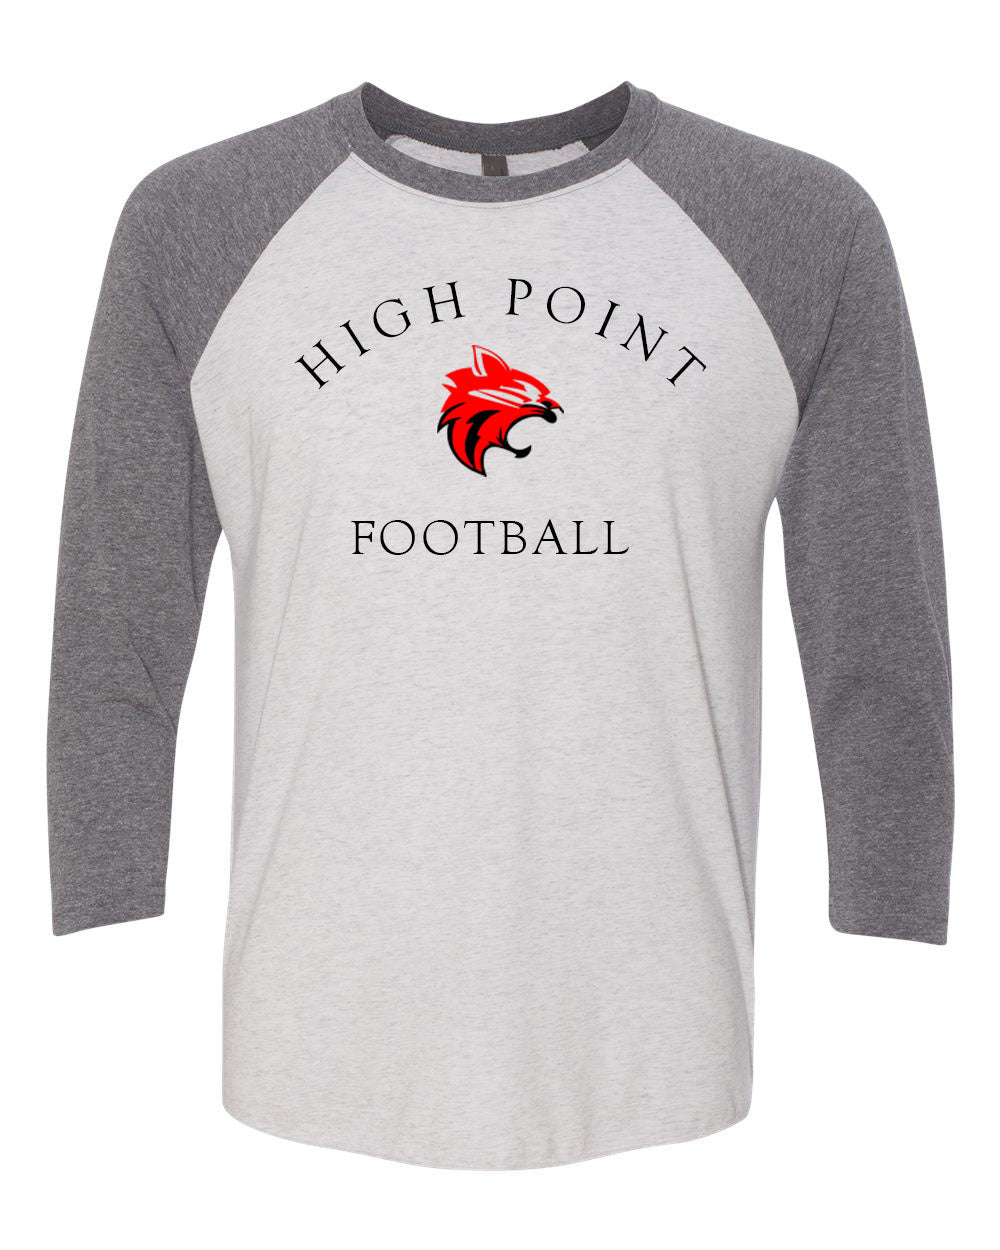 High Point Football design 3 raglan shirt